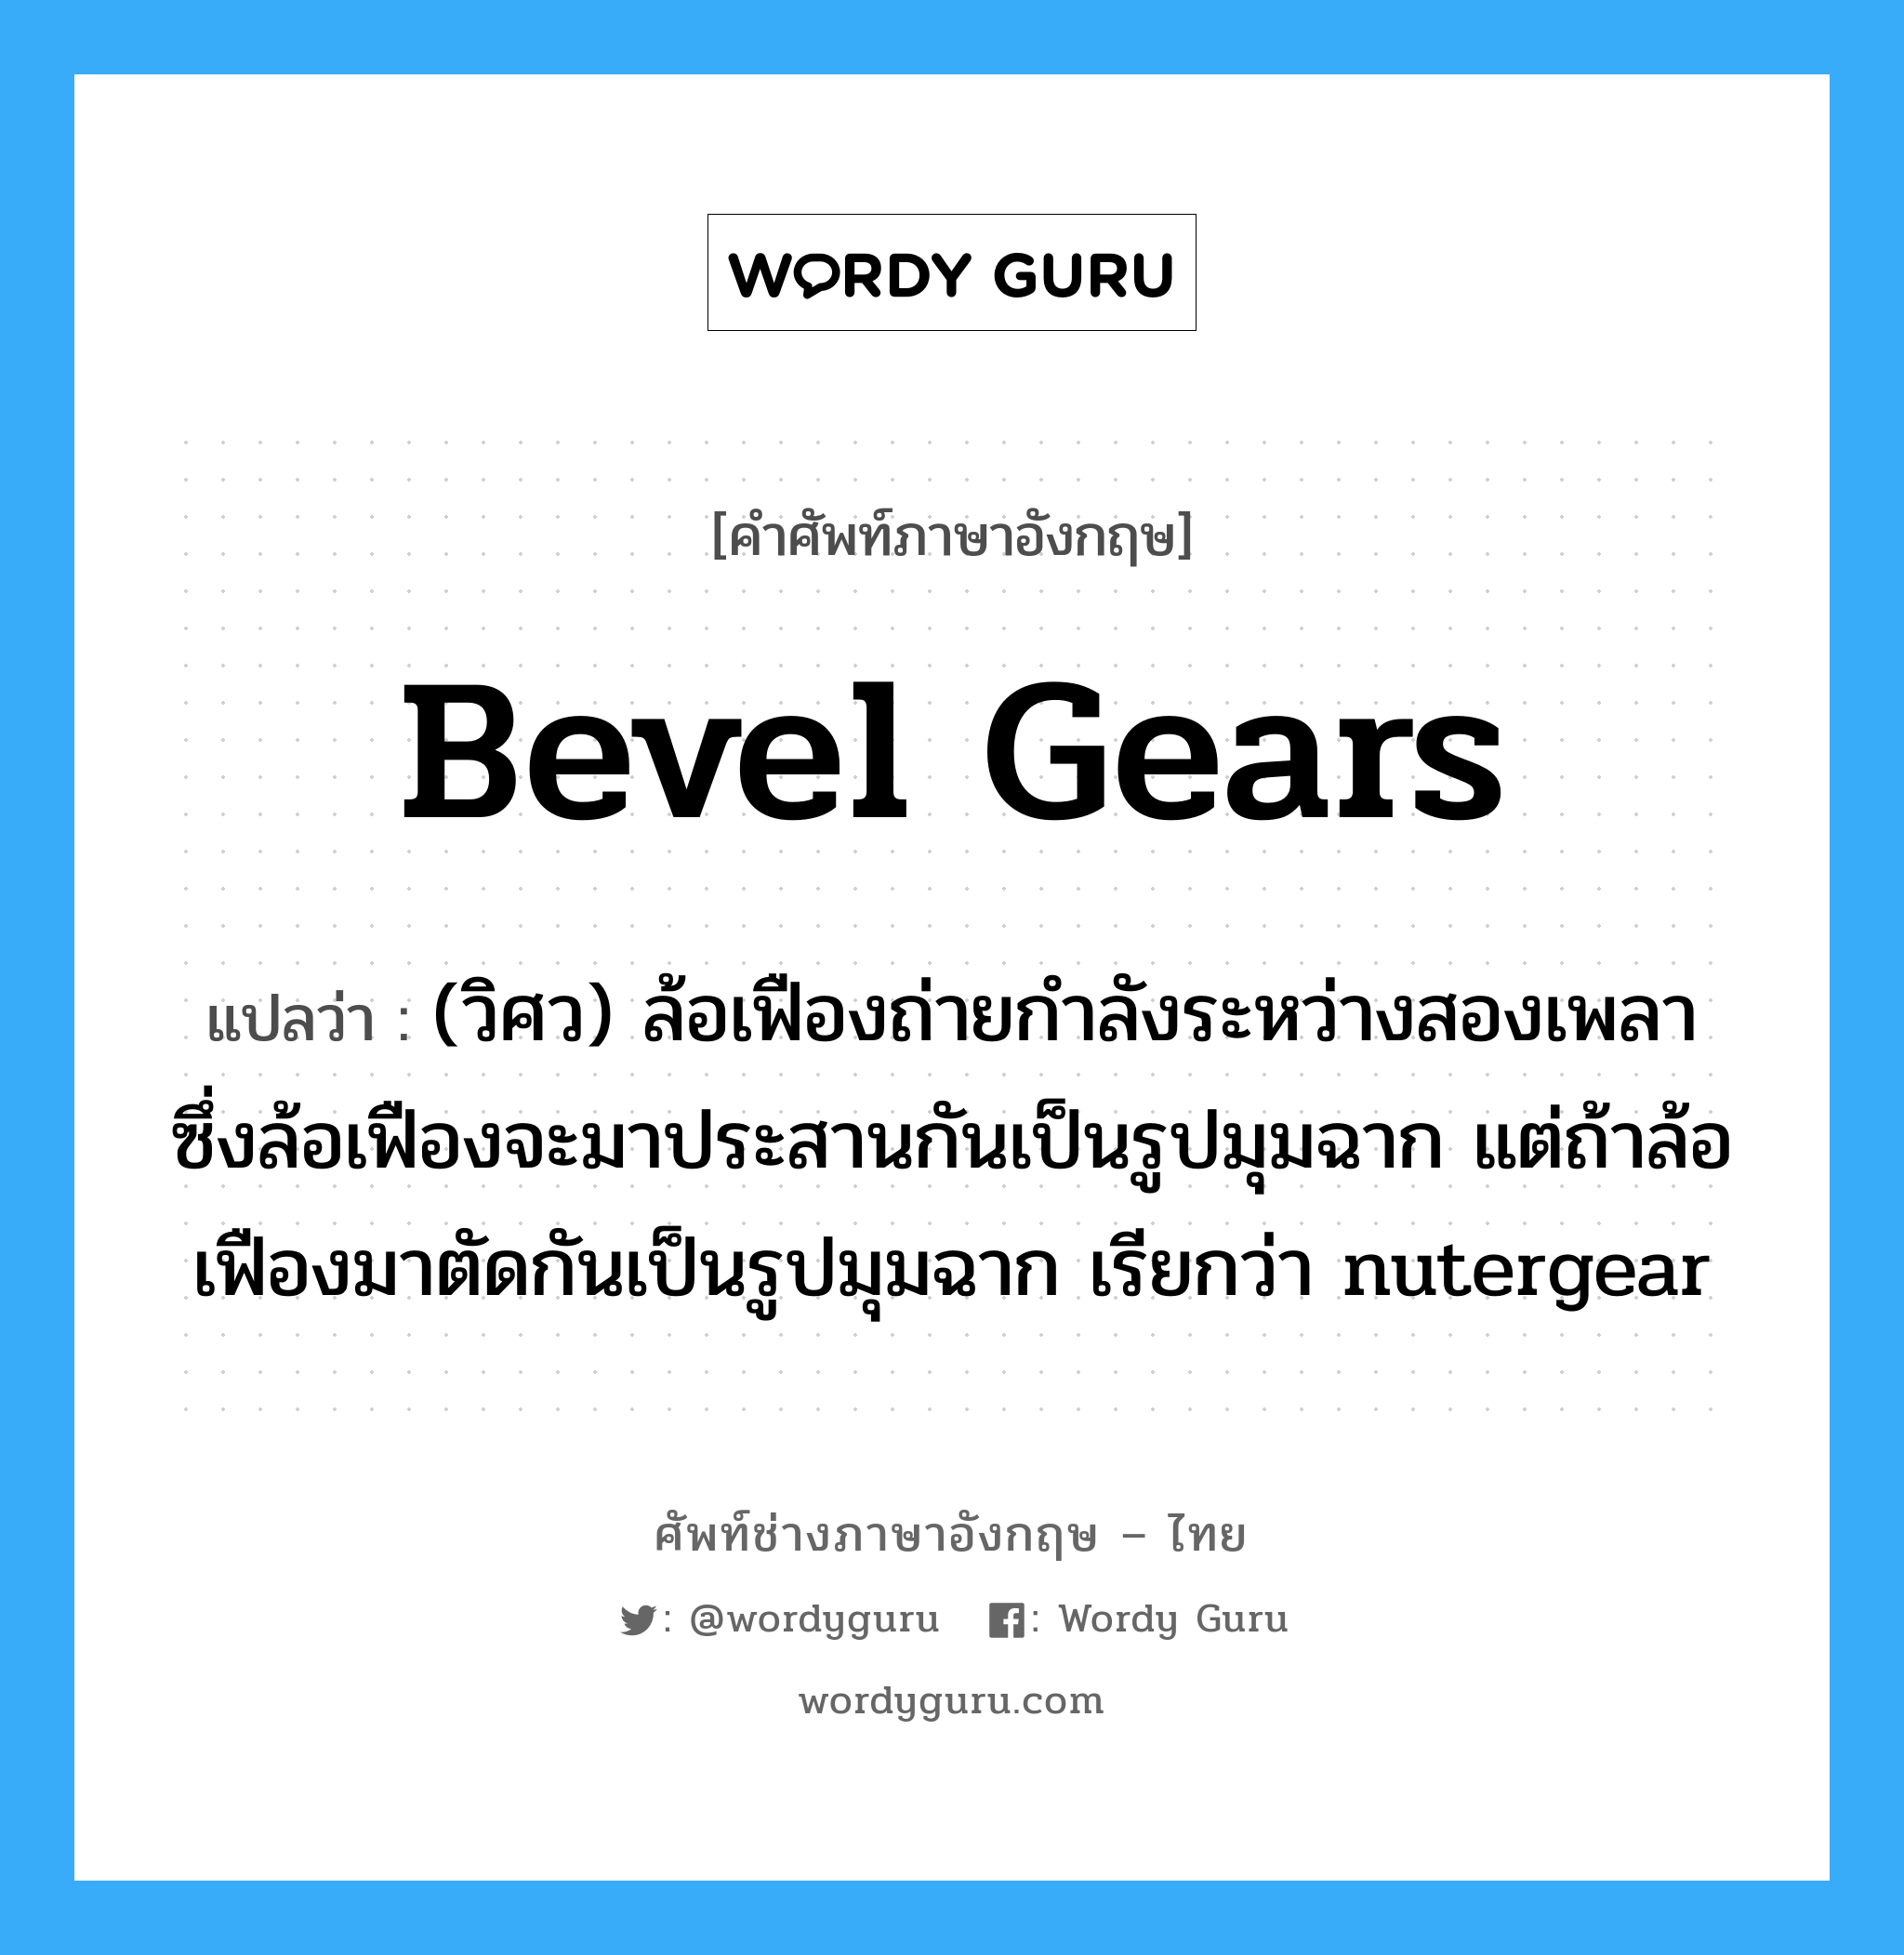 bevel gears แปลว่า?, คำศัพท์ช่างภาษาอังกฤษ - ไทย bevel gears คำศัพท์ภาษาอังกฤษ bevel gears แปลว่า (วิศว) ล้อเฟืองถ่ายกำลังระหว่างสองเพลา ซึ่งล้อเฟืองจะมาประสานกันเป็นรูปมุมฉาก แต่ถ้าล้อเฟืองมาตัดกันเป็นรูปมุมฉาก เรียกว่า nutergear